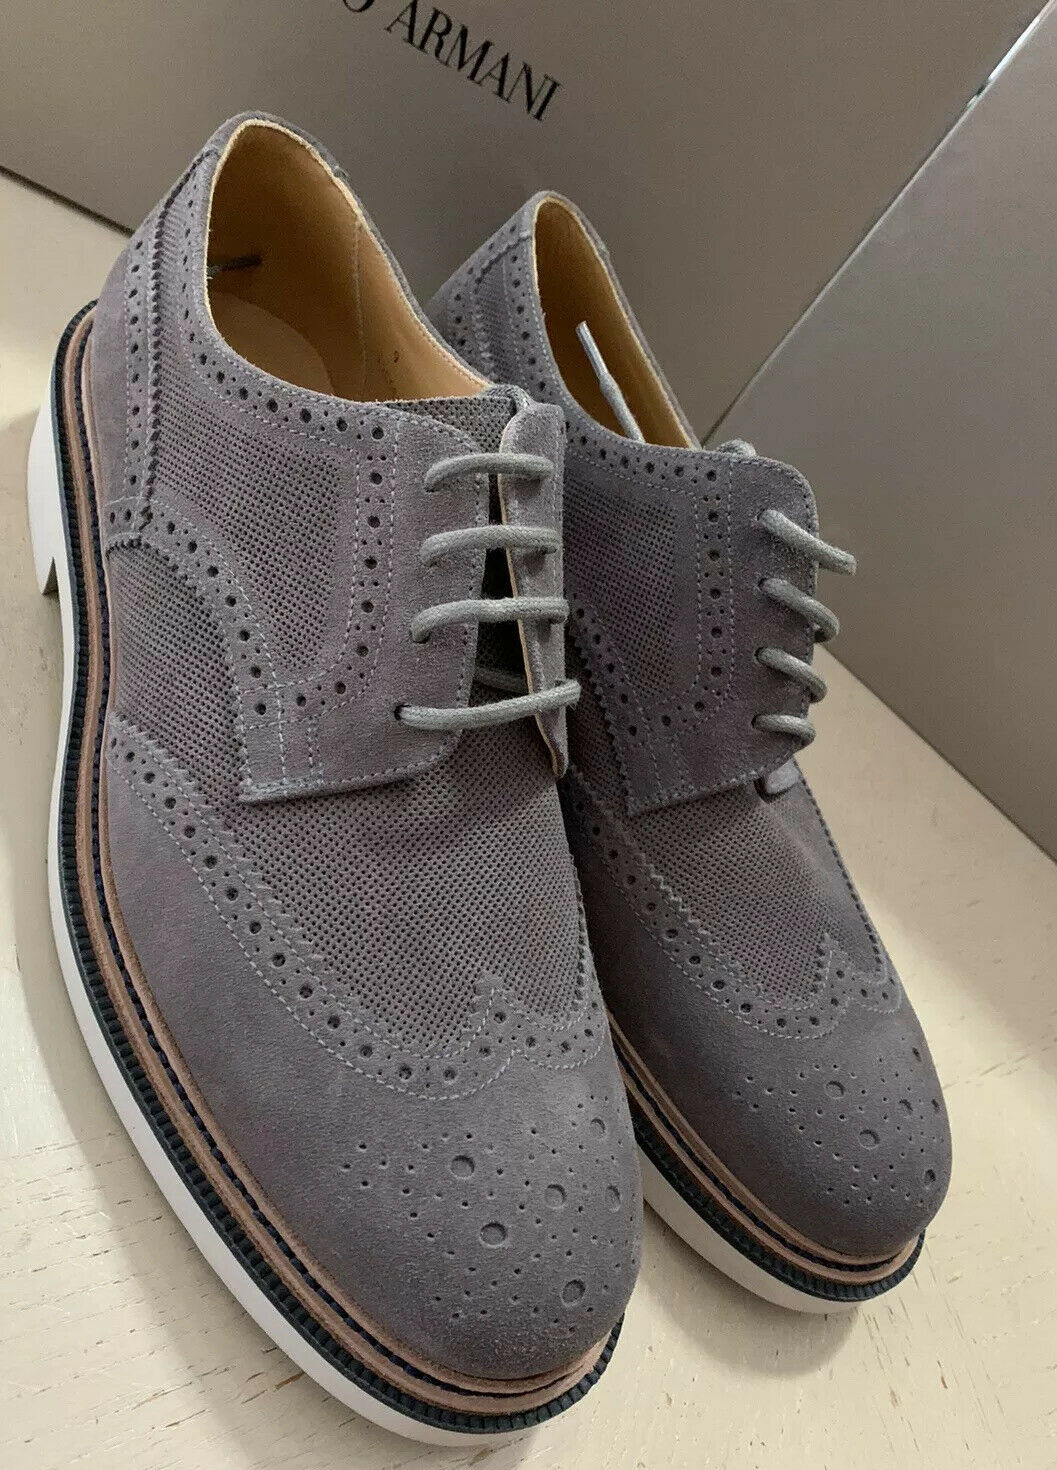 New $1095 Giorgio Armani Men Spectator Shoes Gray 10.5 US/9.5 Eu X2C561